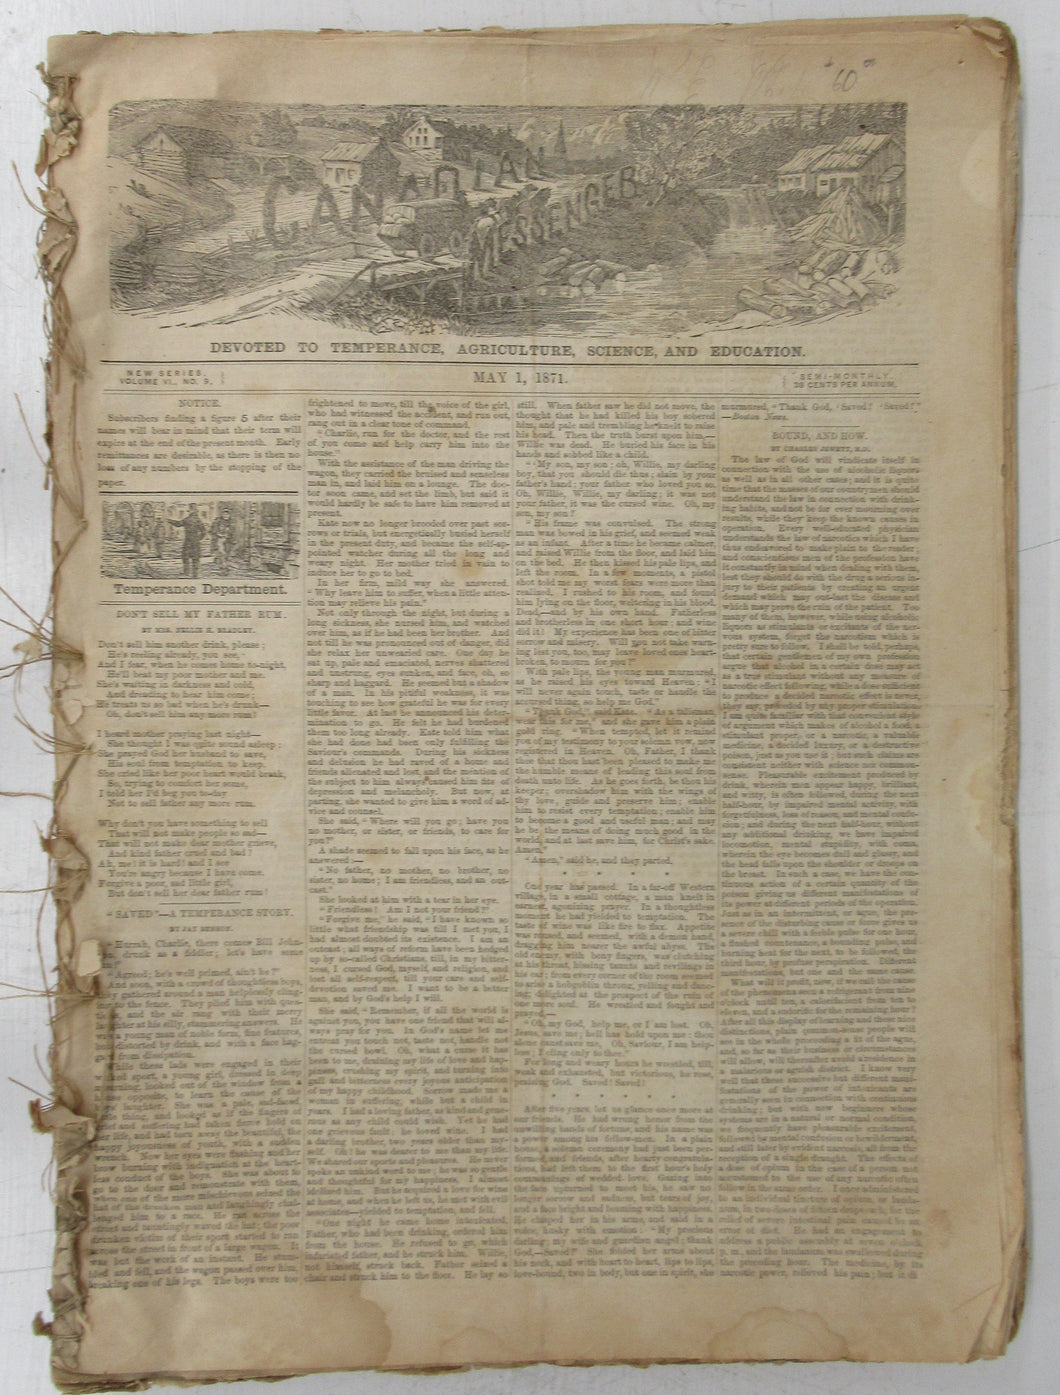 Canadian Messenger, May 1, 1871 - Jan. 2, 1872